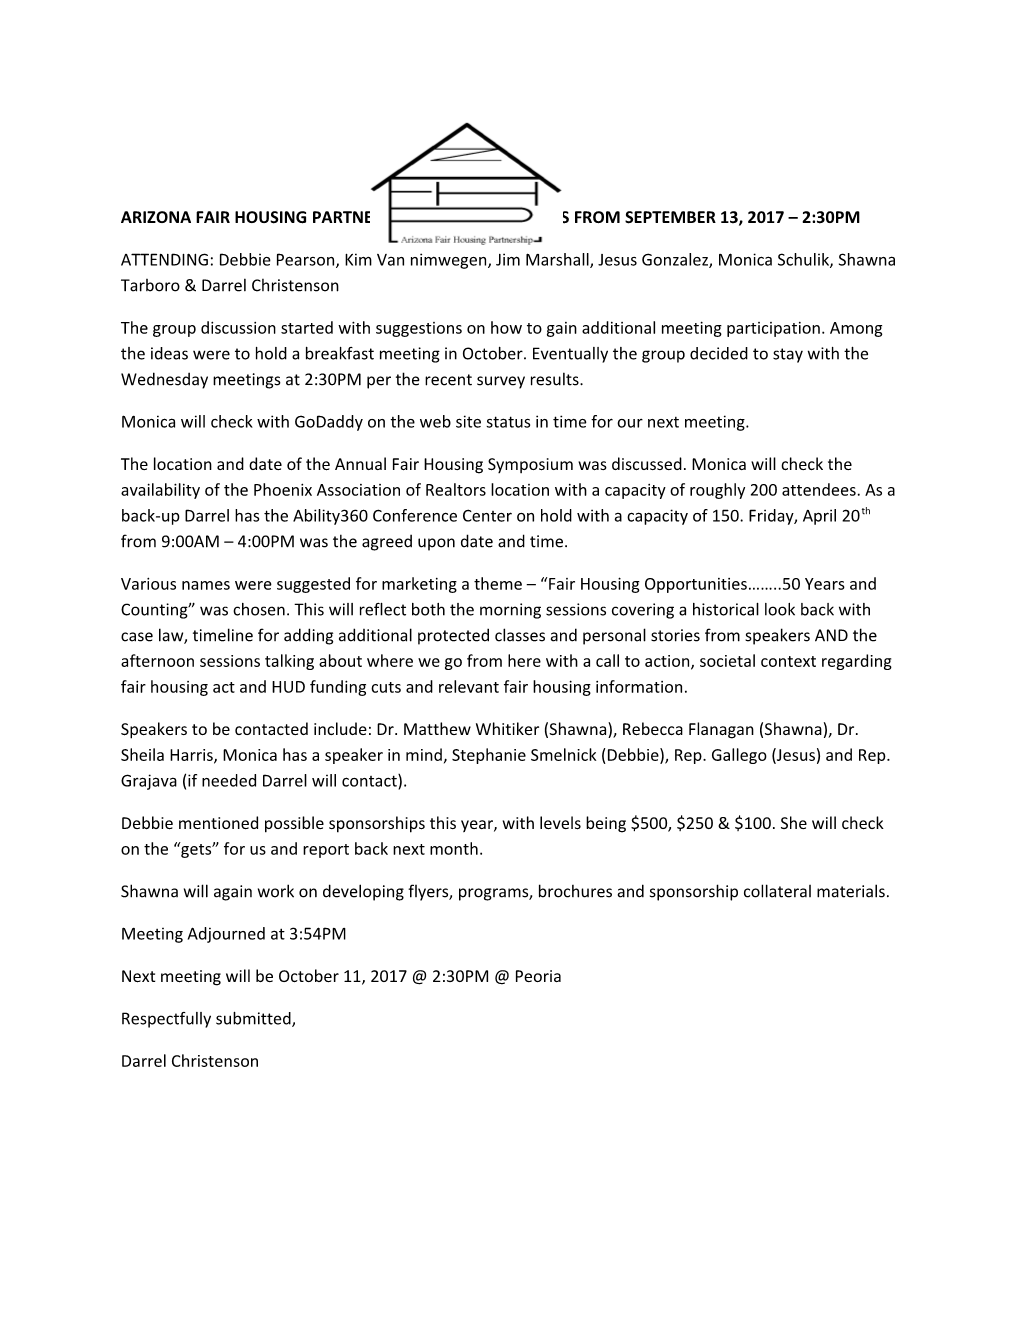 Arizona Fair Housing Partnership Meeting Minutes from September 13, 2017 2:30Pm